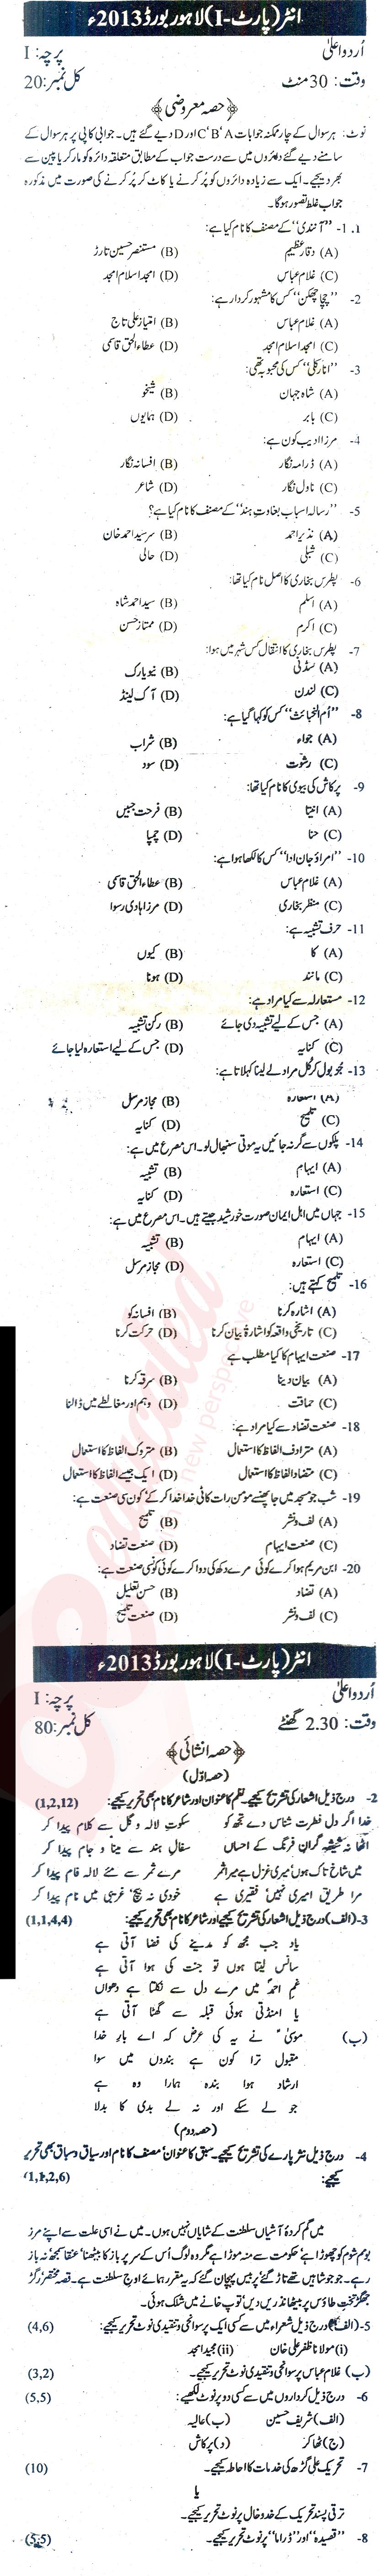 Urdu 11th class Past Paper Group 1 BISE Lahore 2013